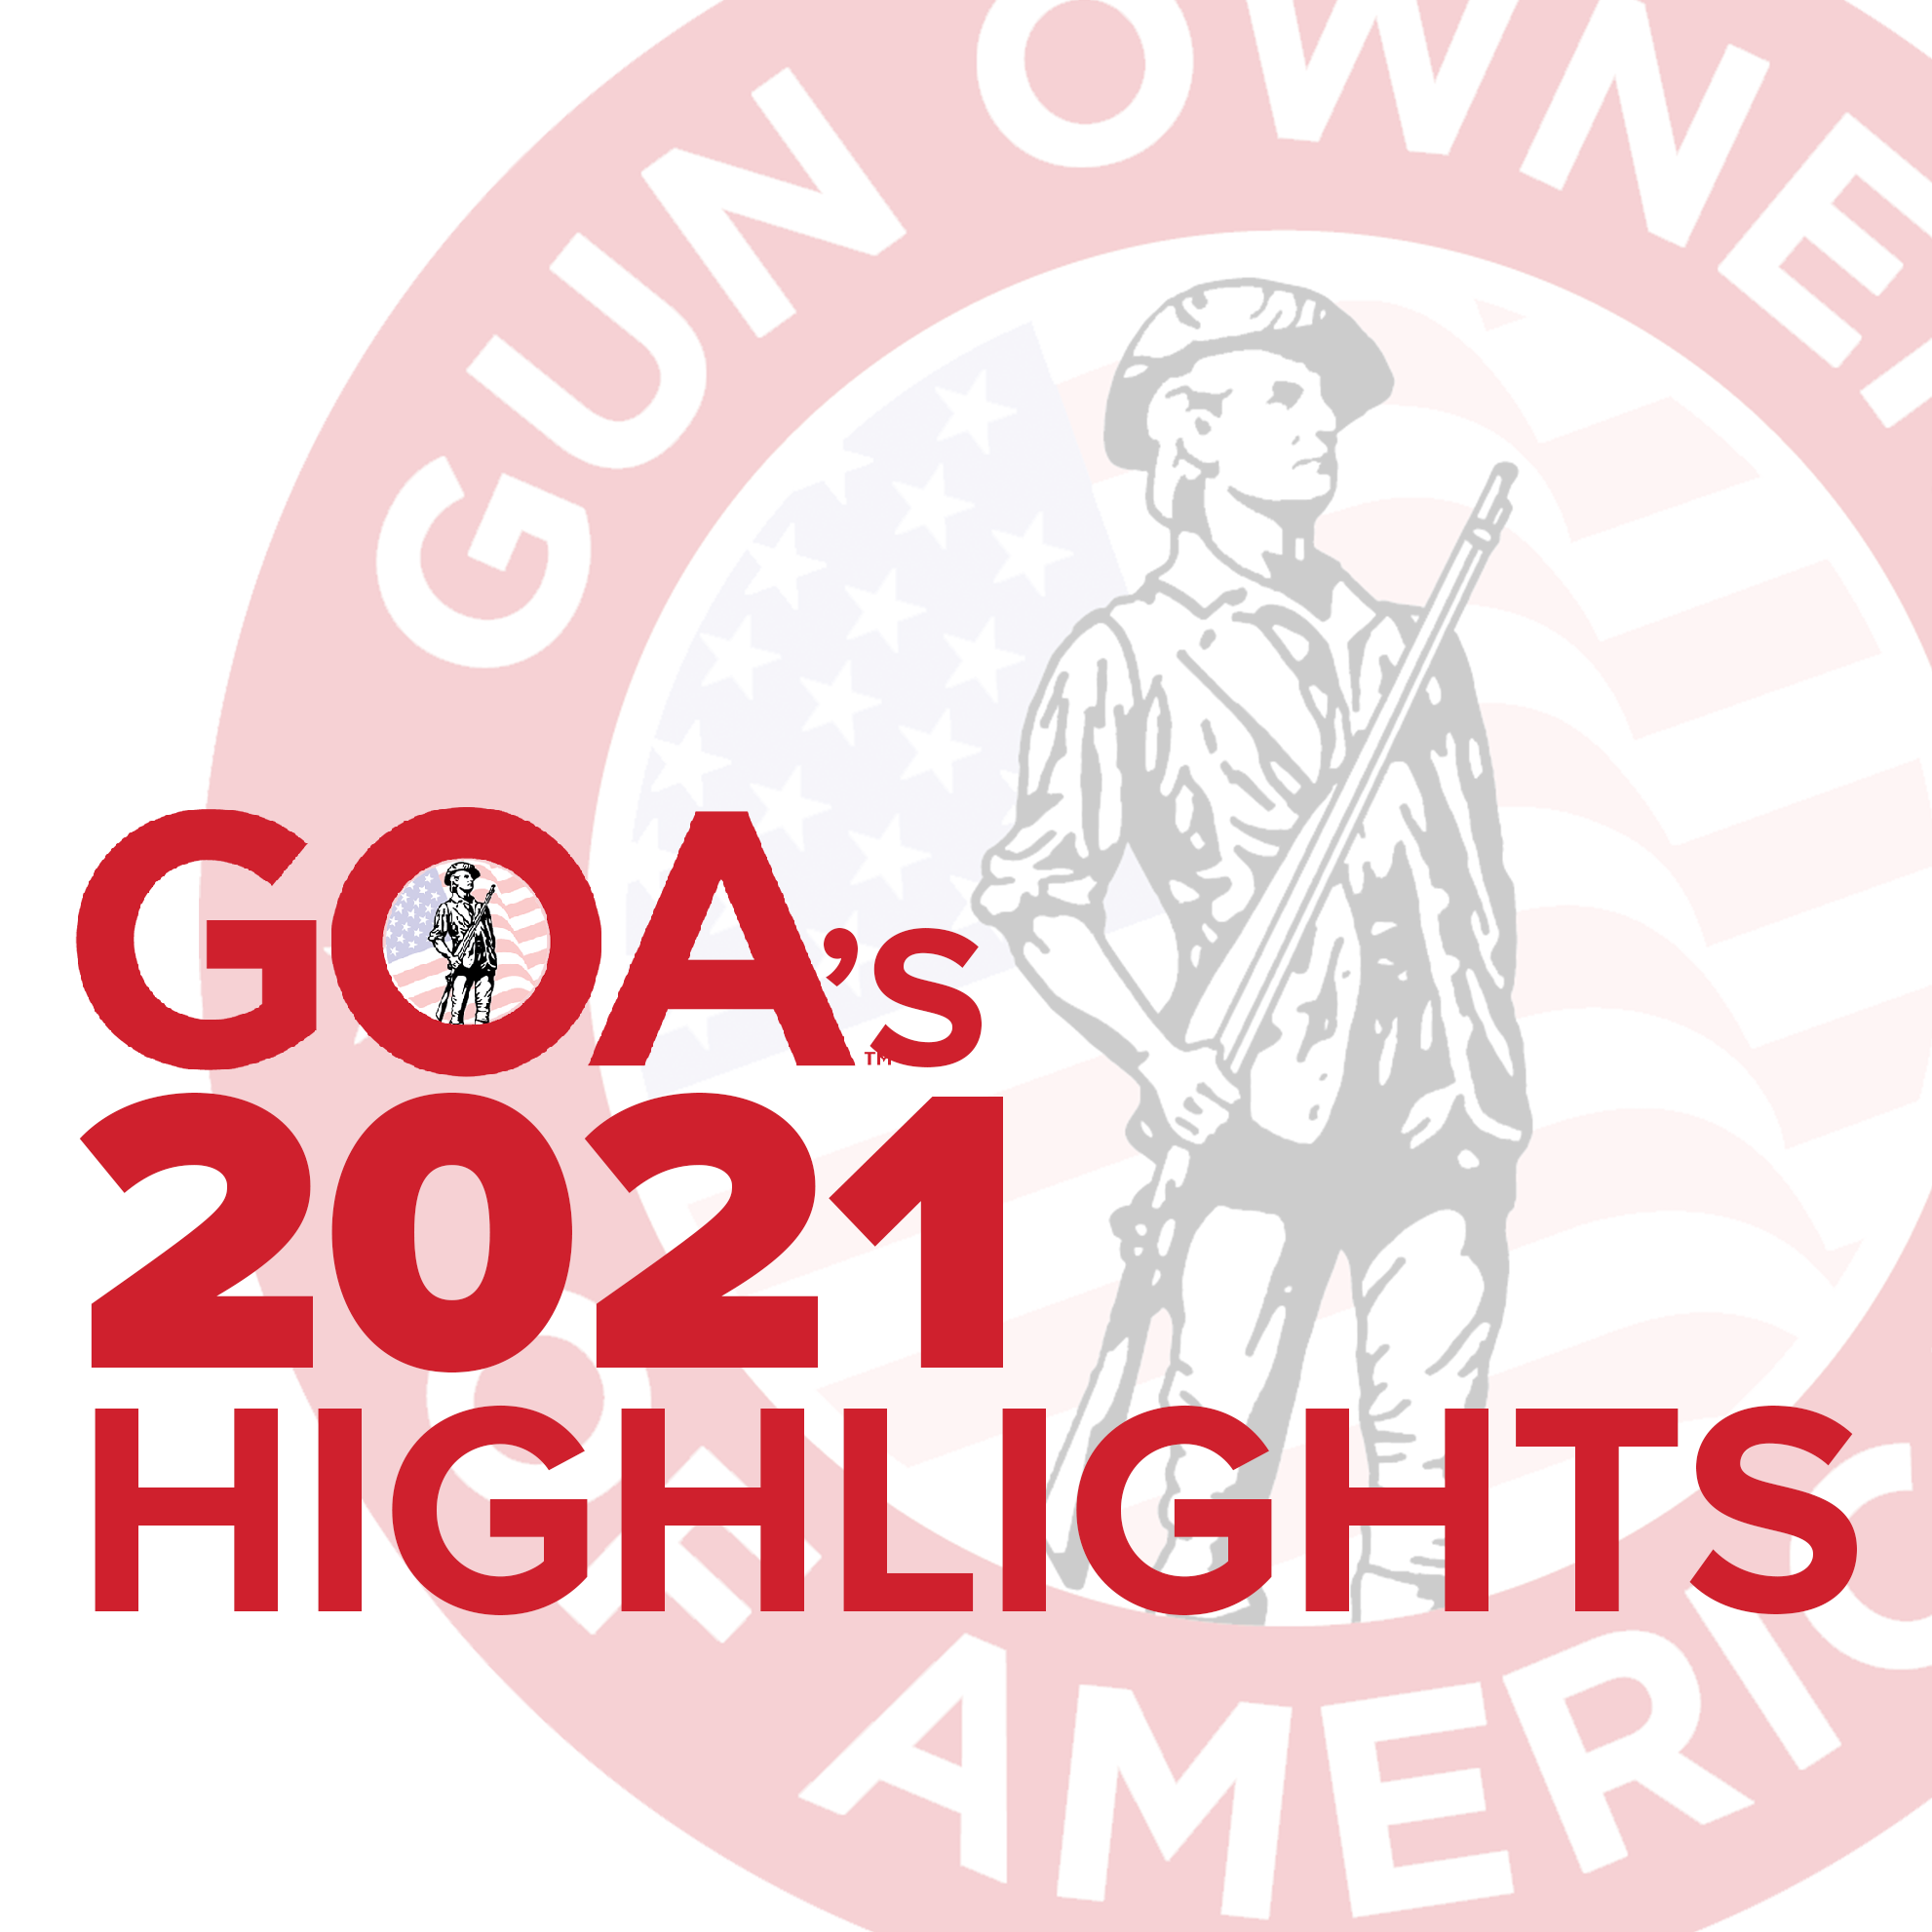 www.gunowners.org